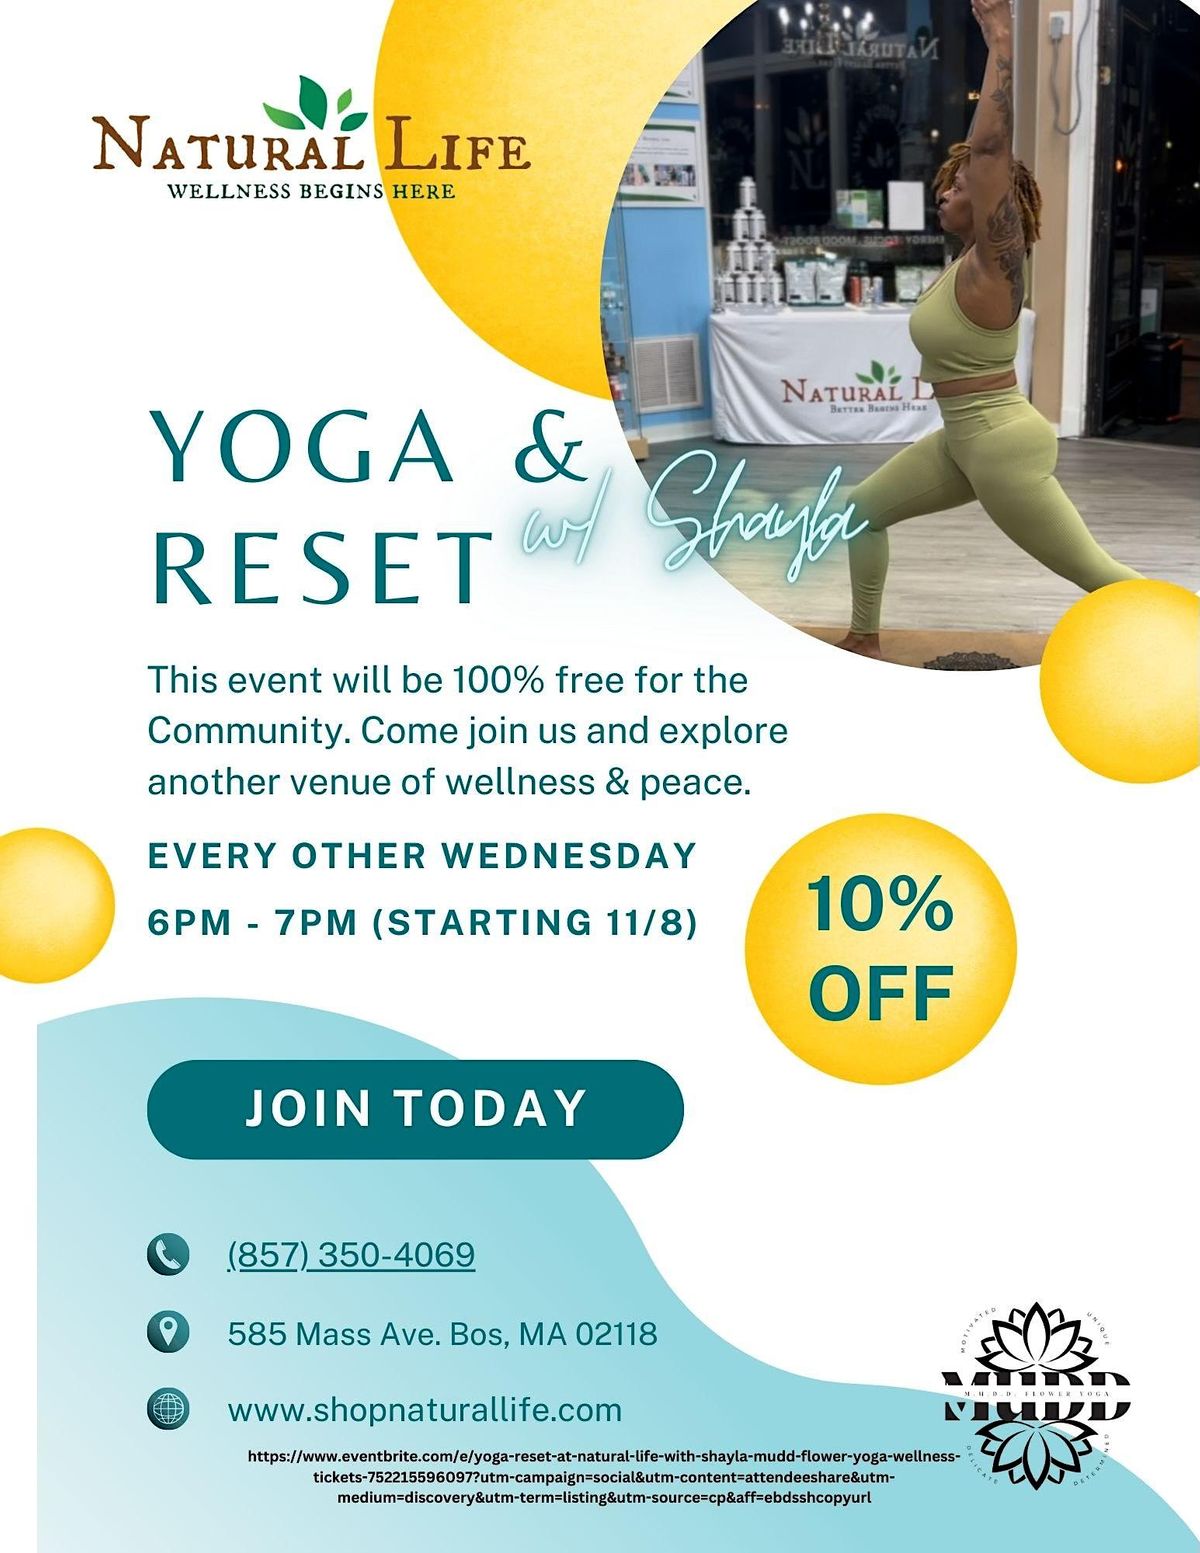 Yoga & Reset with Shayla M.U.D.D. Flower Yoga & Wellness